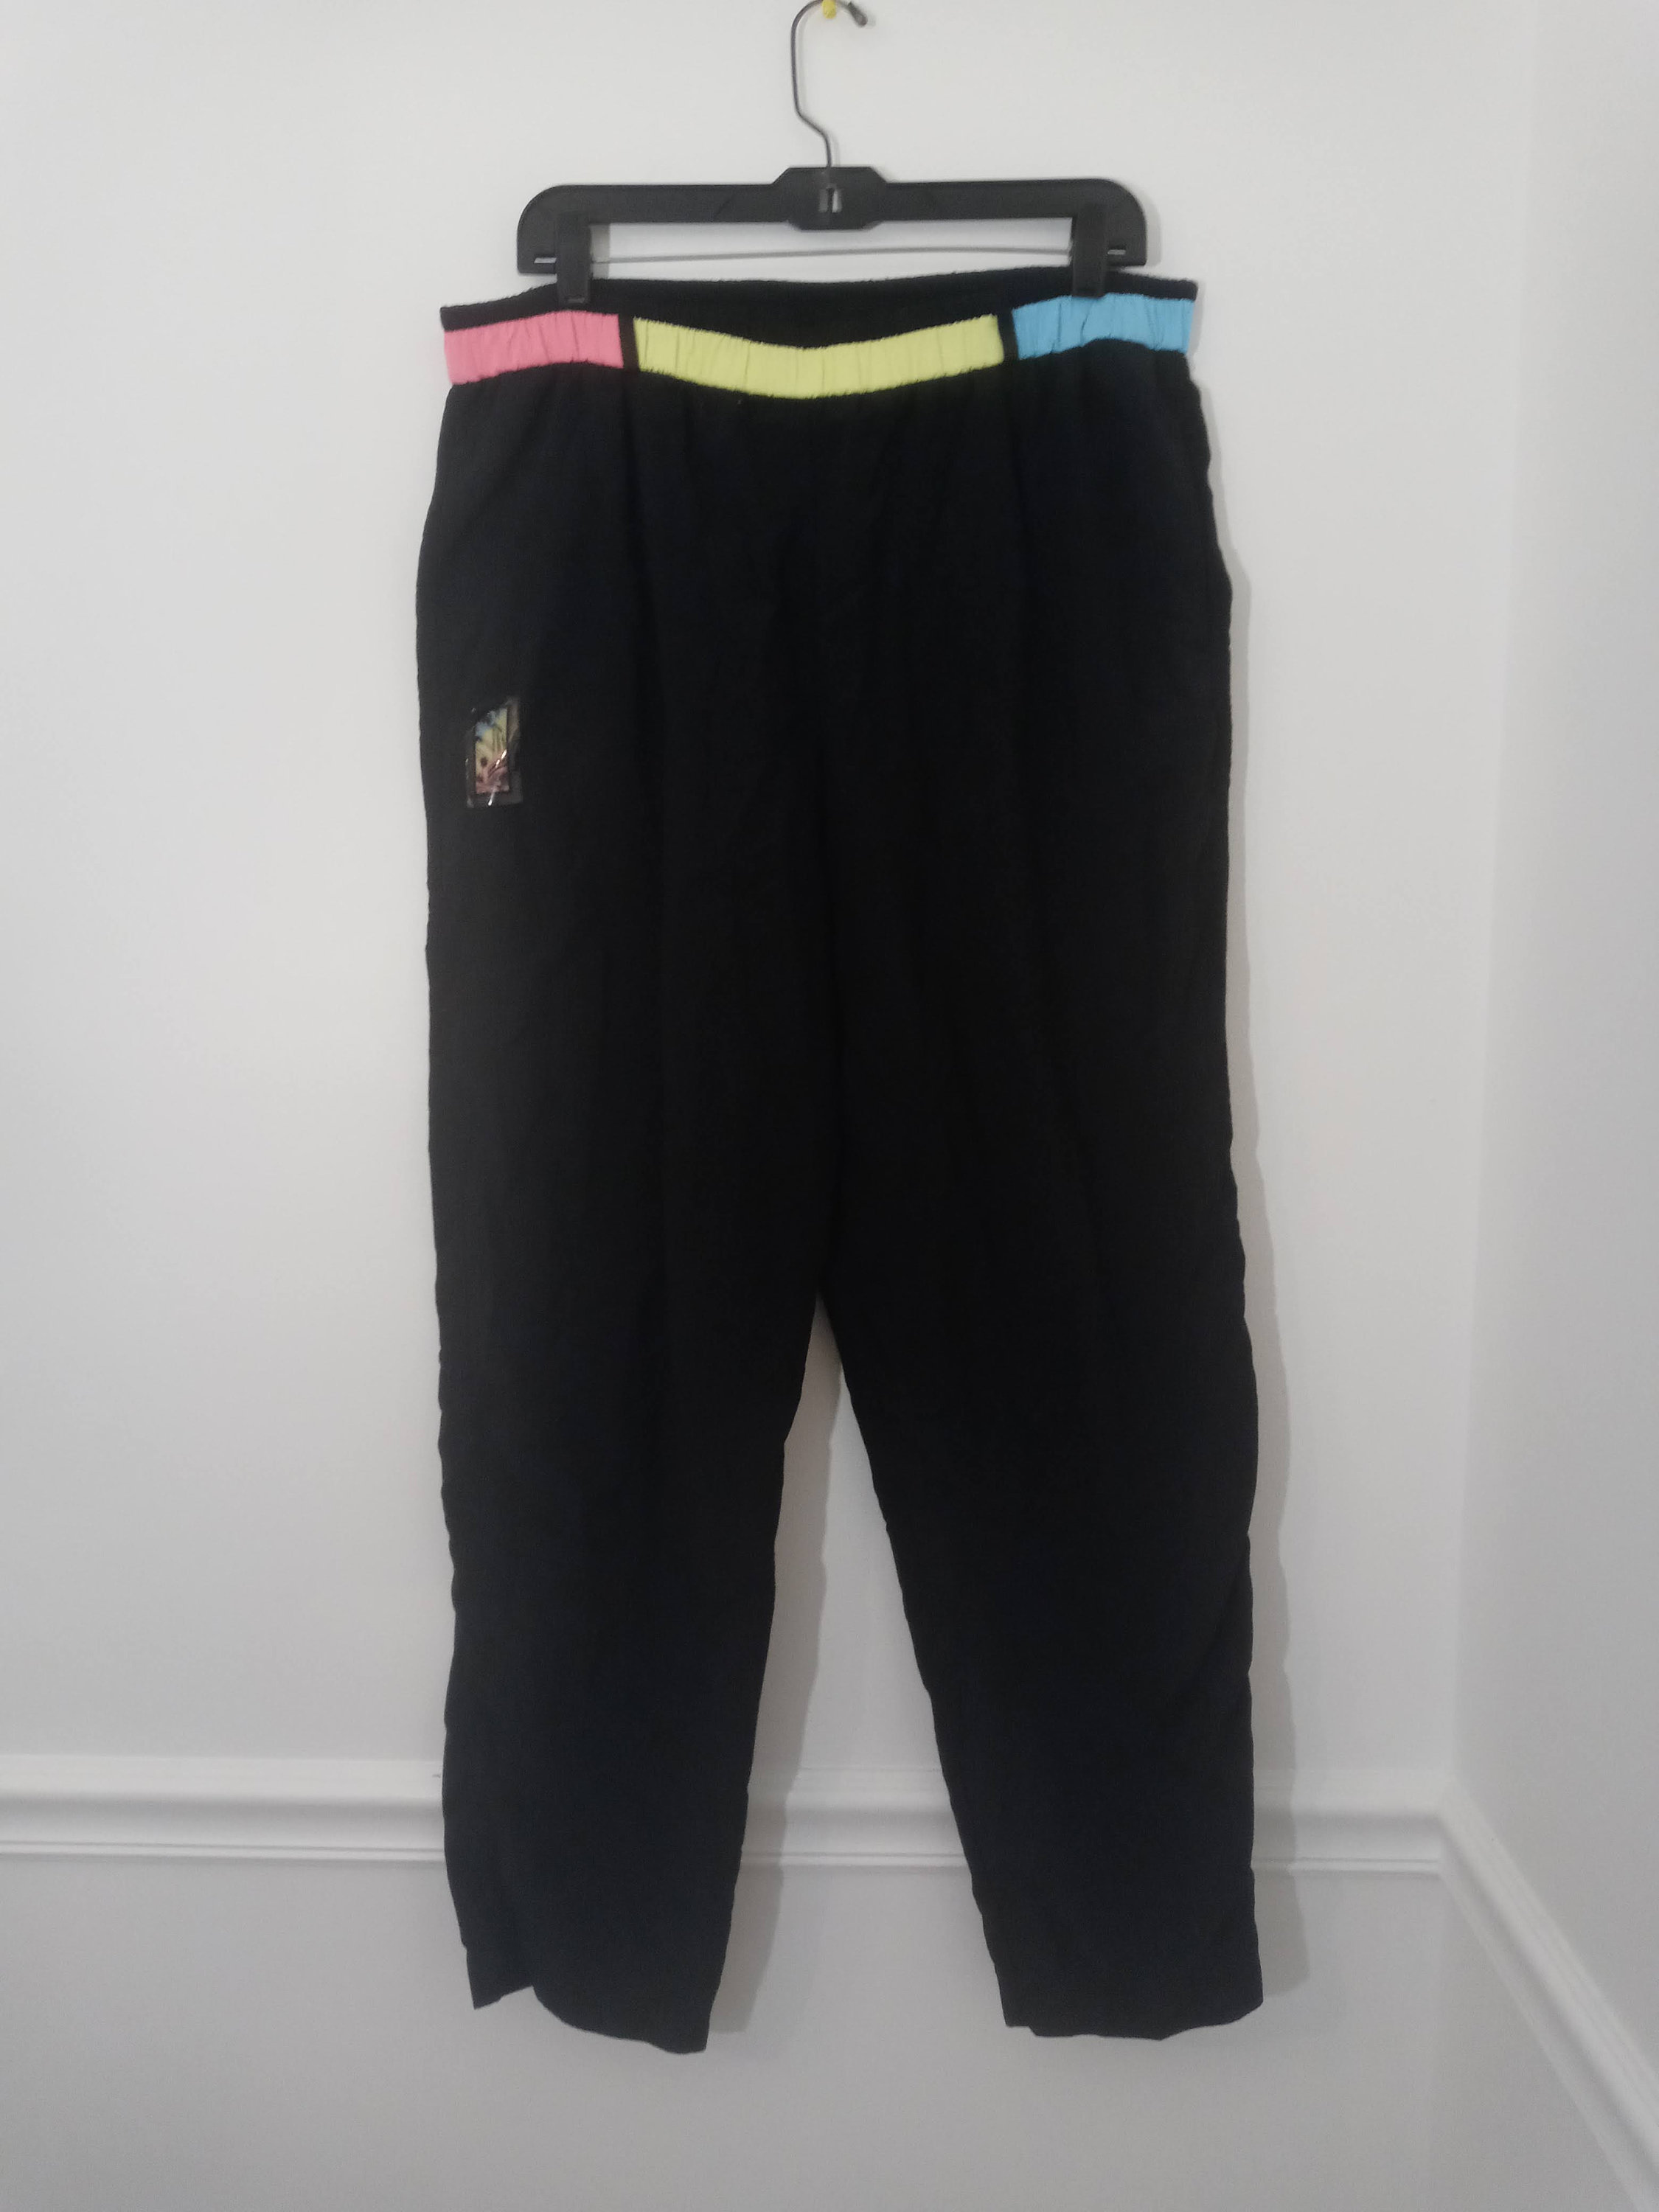 PacSun 1980 Fleece Sweat Shorts in Black for Men